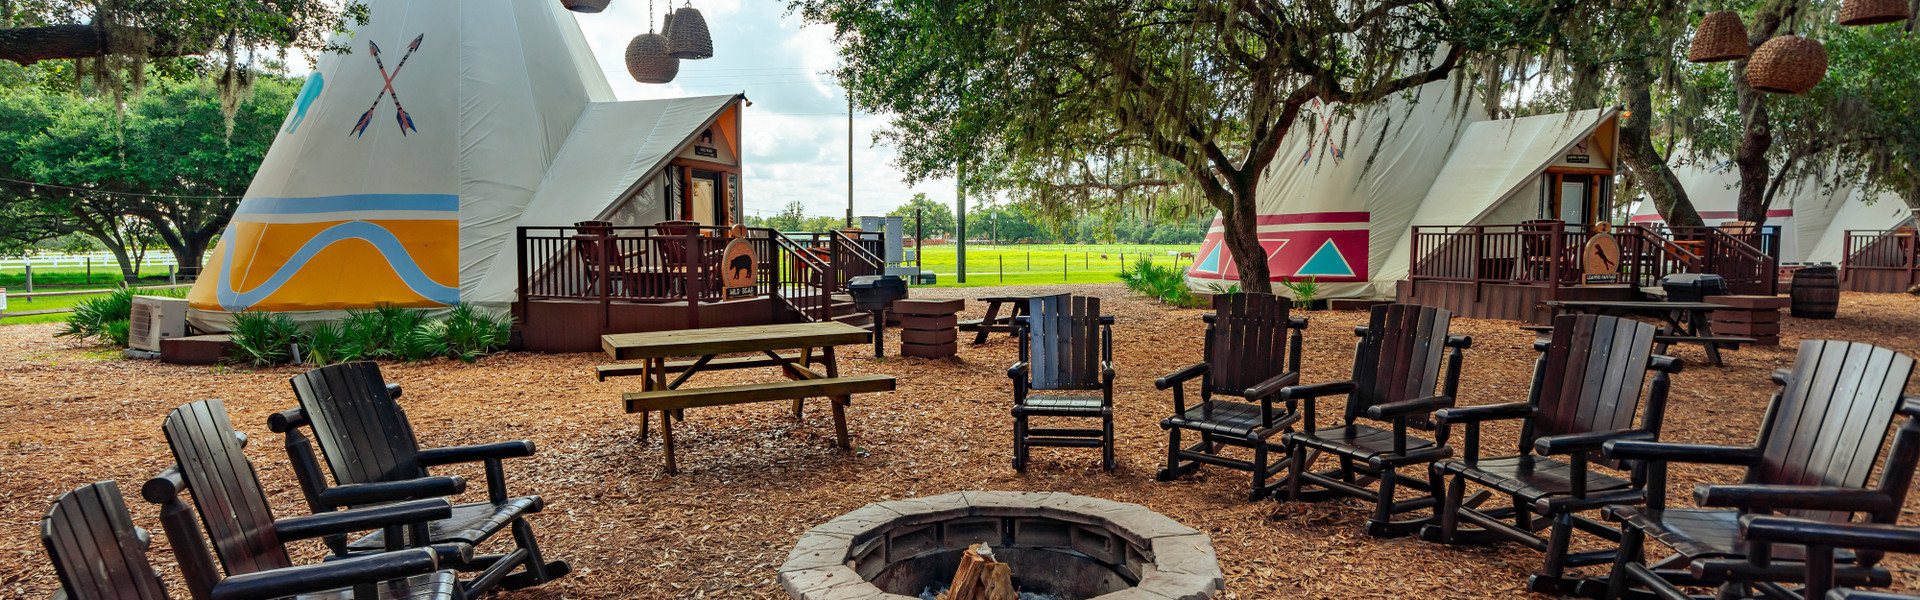 Digital Detox Retreat Florida | Westgate River Ranch Resort